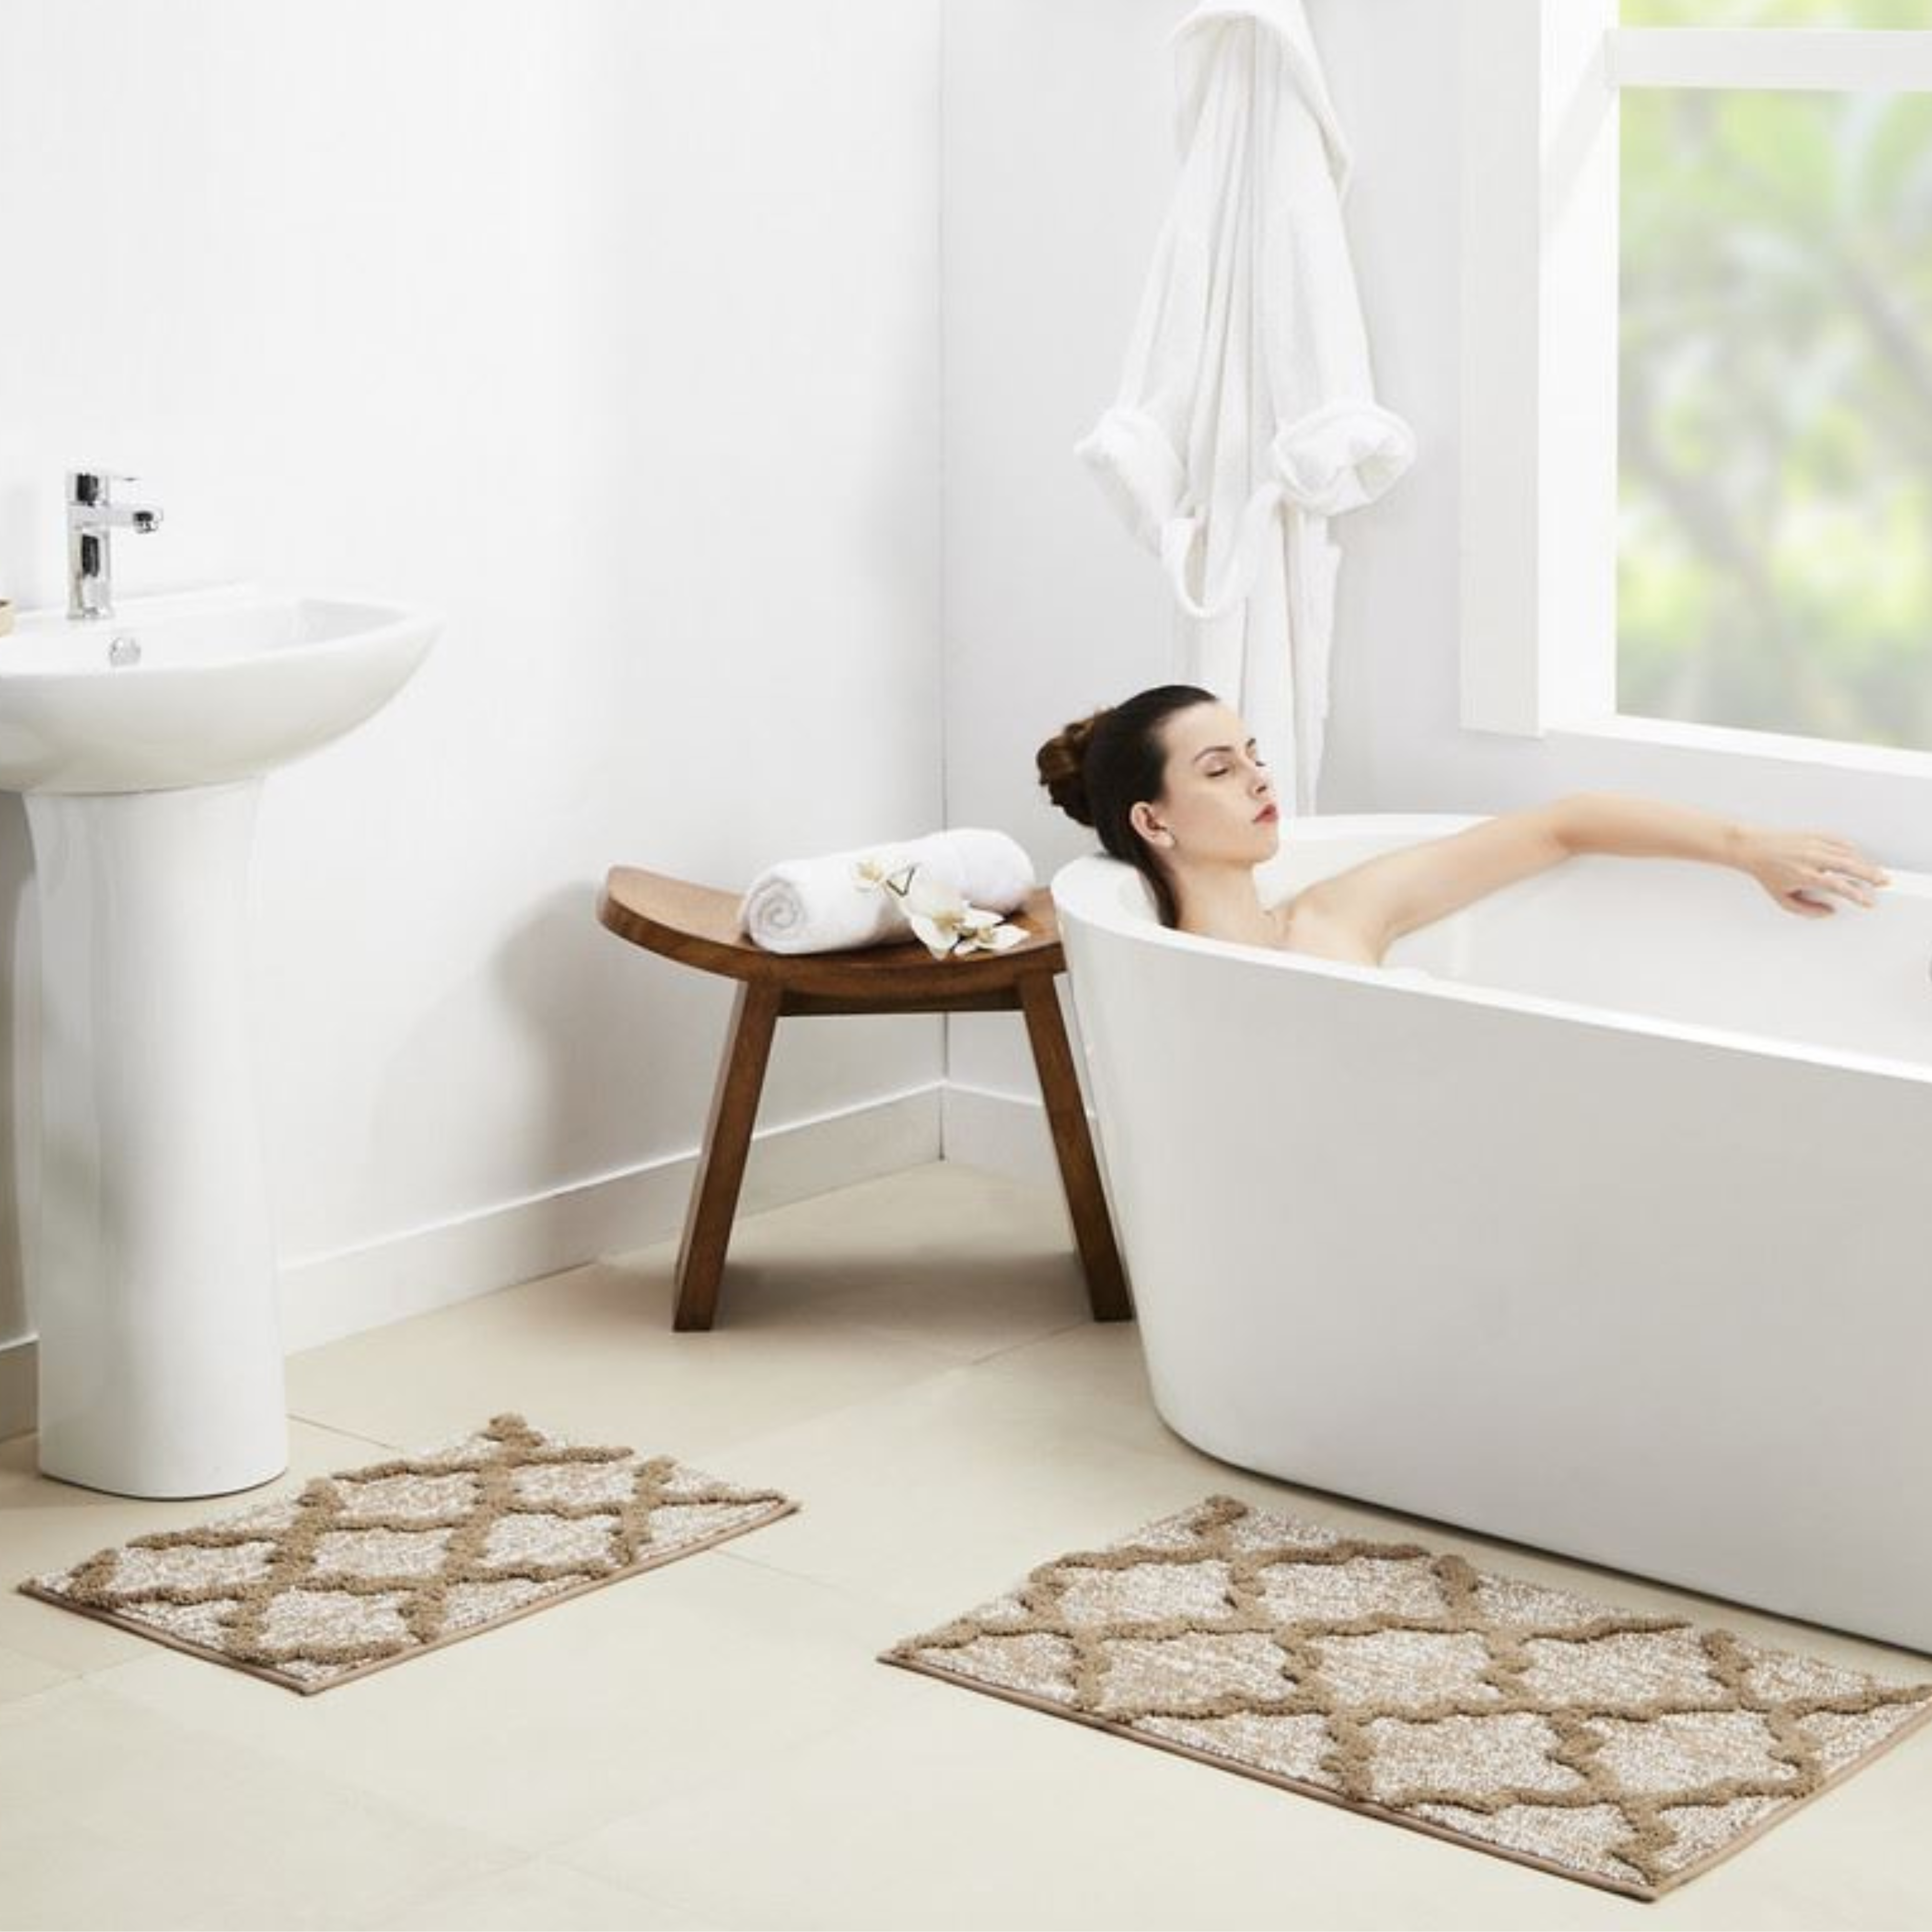 Extra Large Bathroom Bath Rugs Mat Anti-Slip Gel Back Non-Slip Shower Bath  Mats